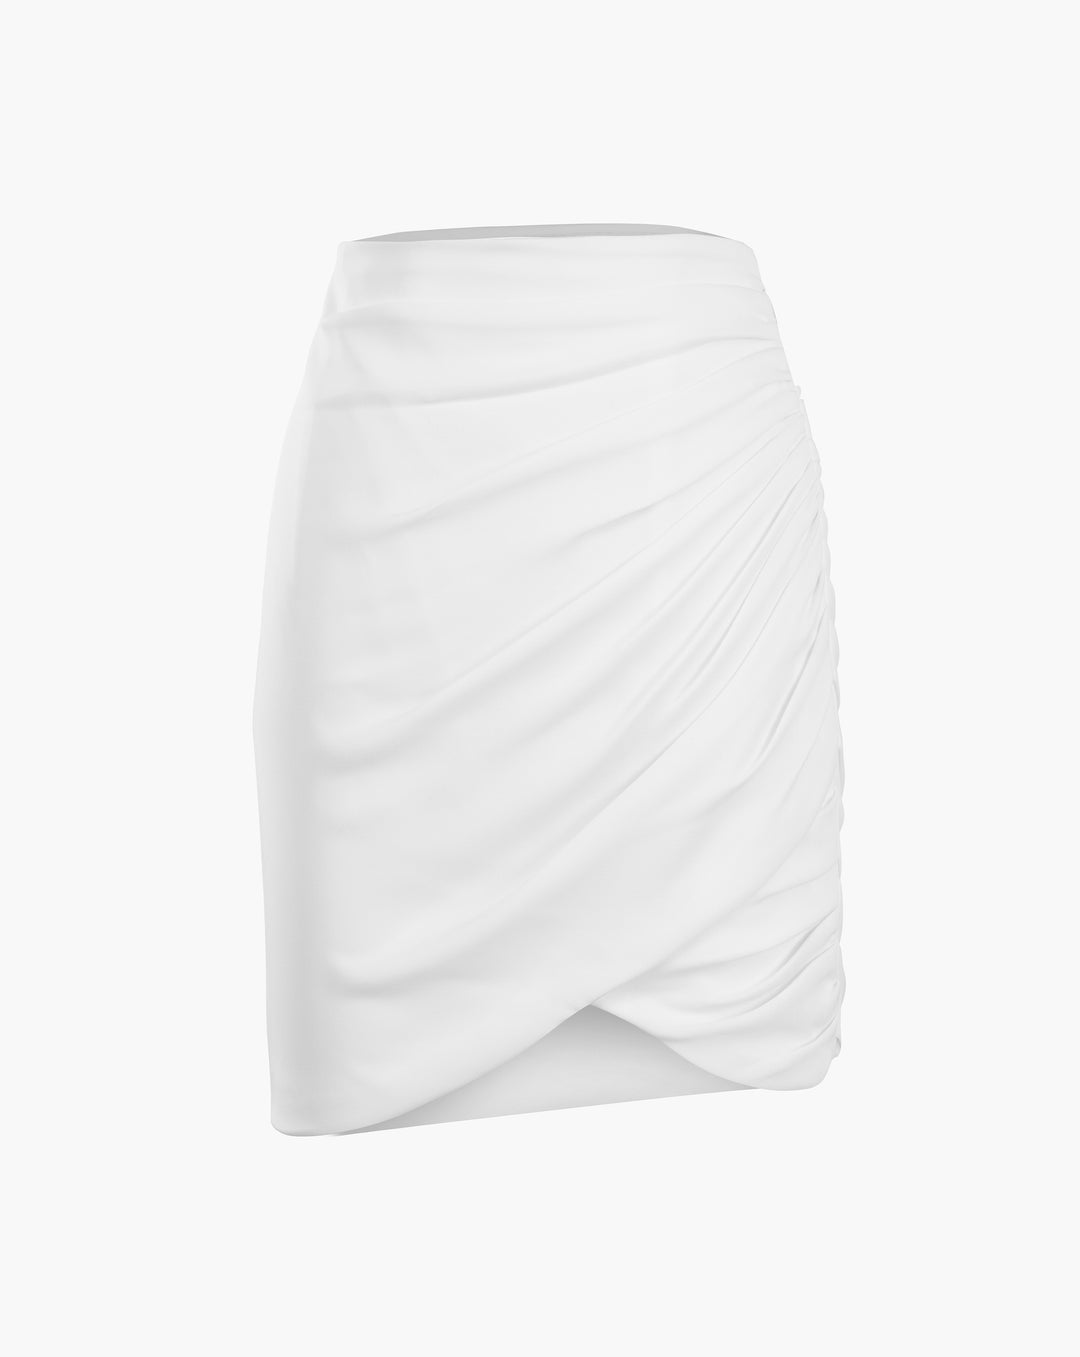 The Draped Skirt